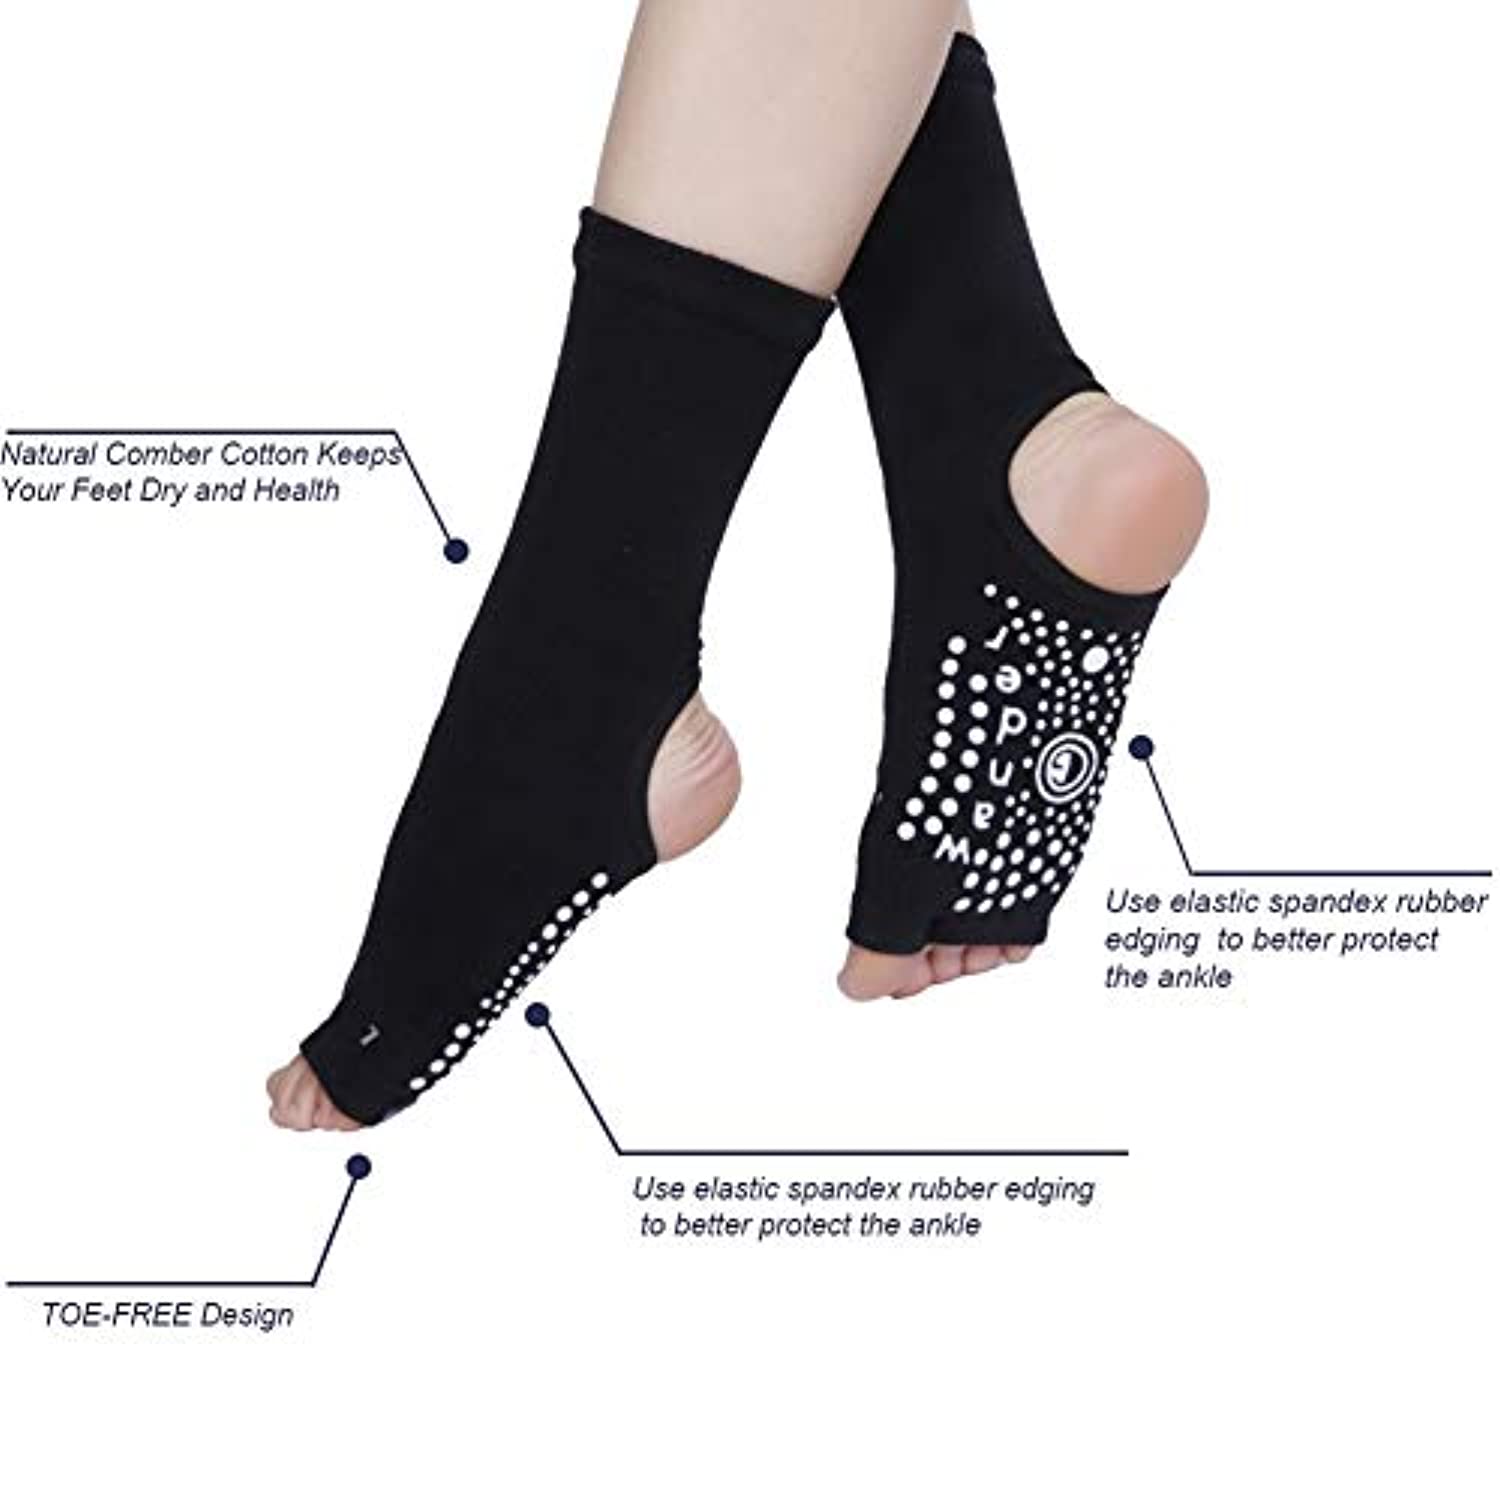 JADIC - Calcetines de pilates para mujer con agarre, antideslizantes, sin  dedos, para ballet, yoga, bar, baile, tamaño libre